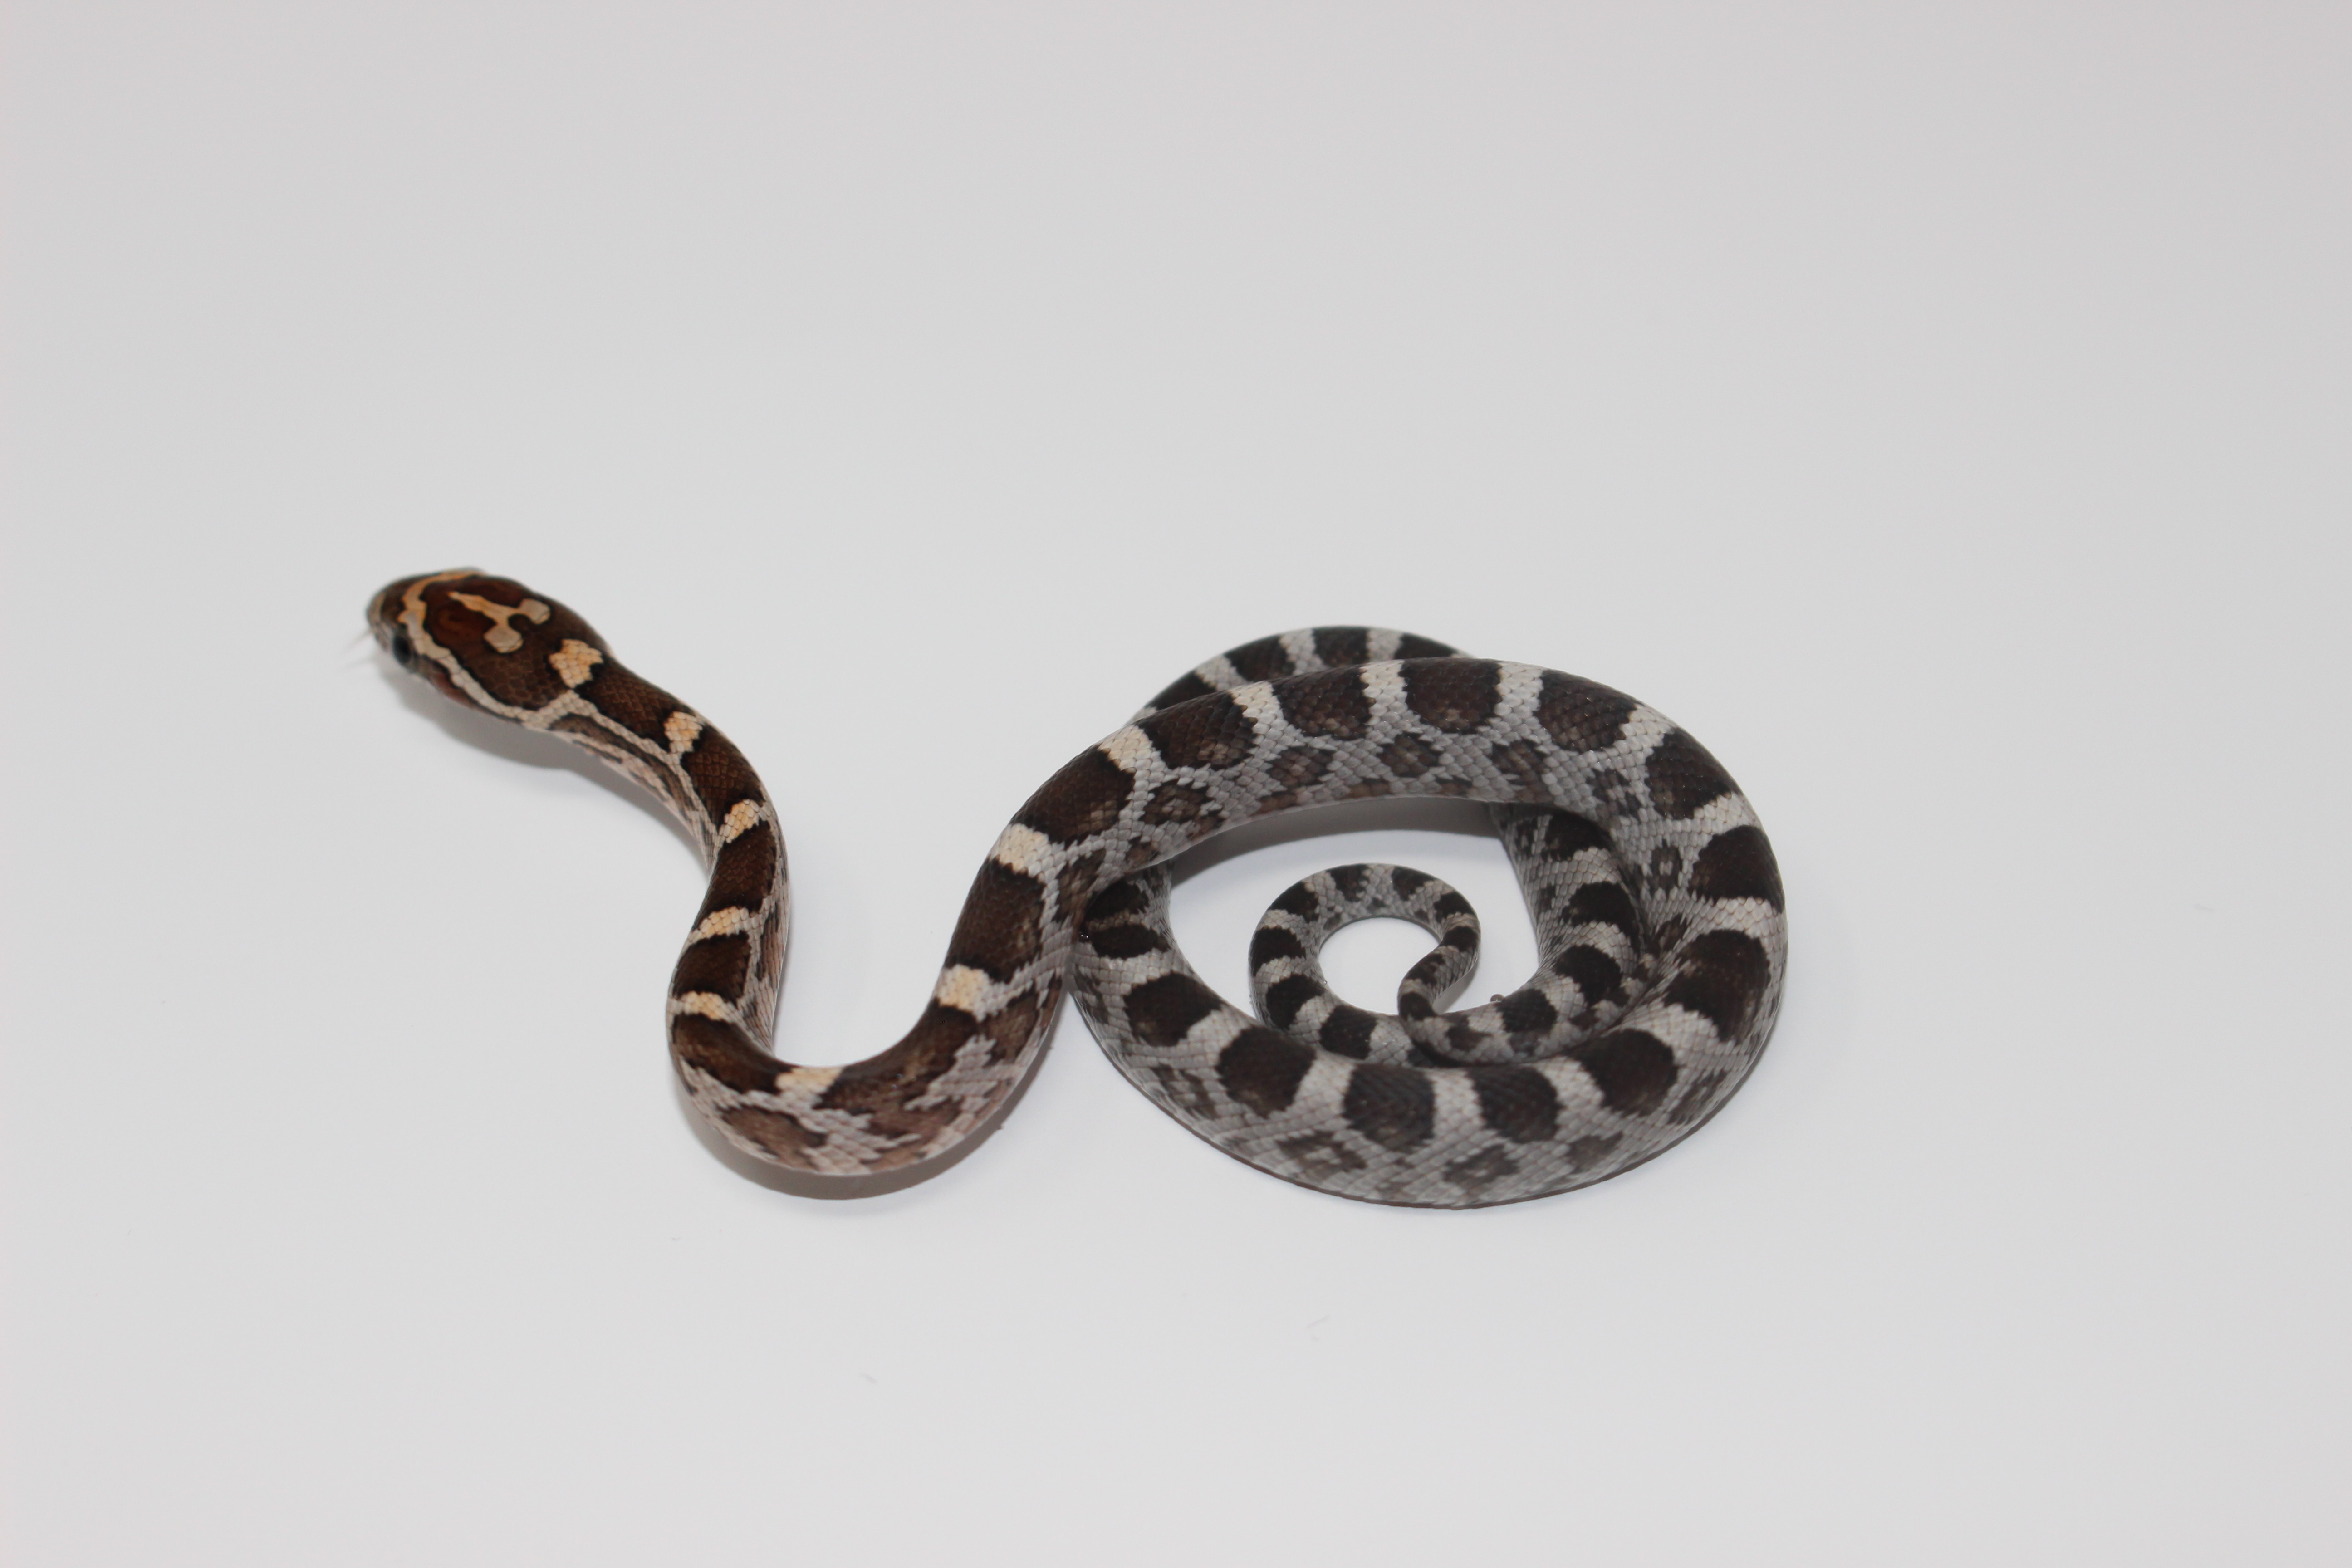 Kastanie Corn Snake by Imperial Reptiles & Exotics, LLC